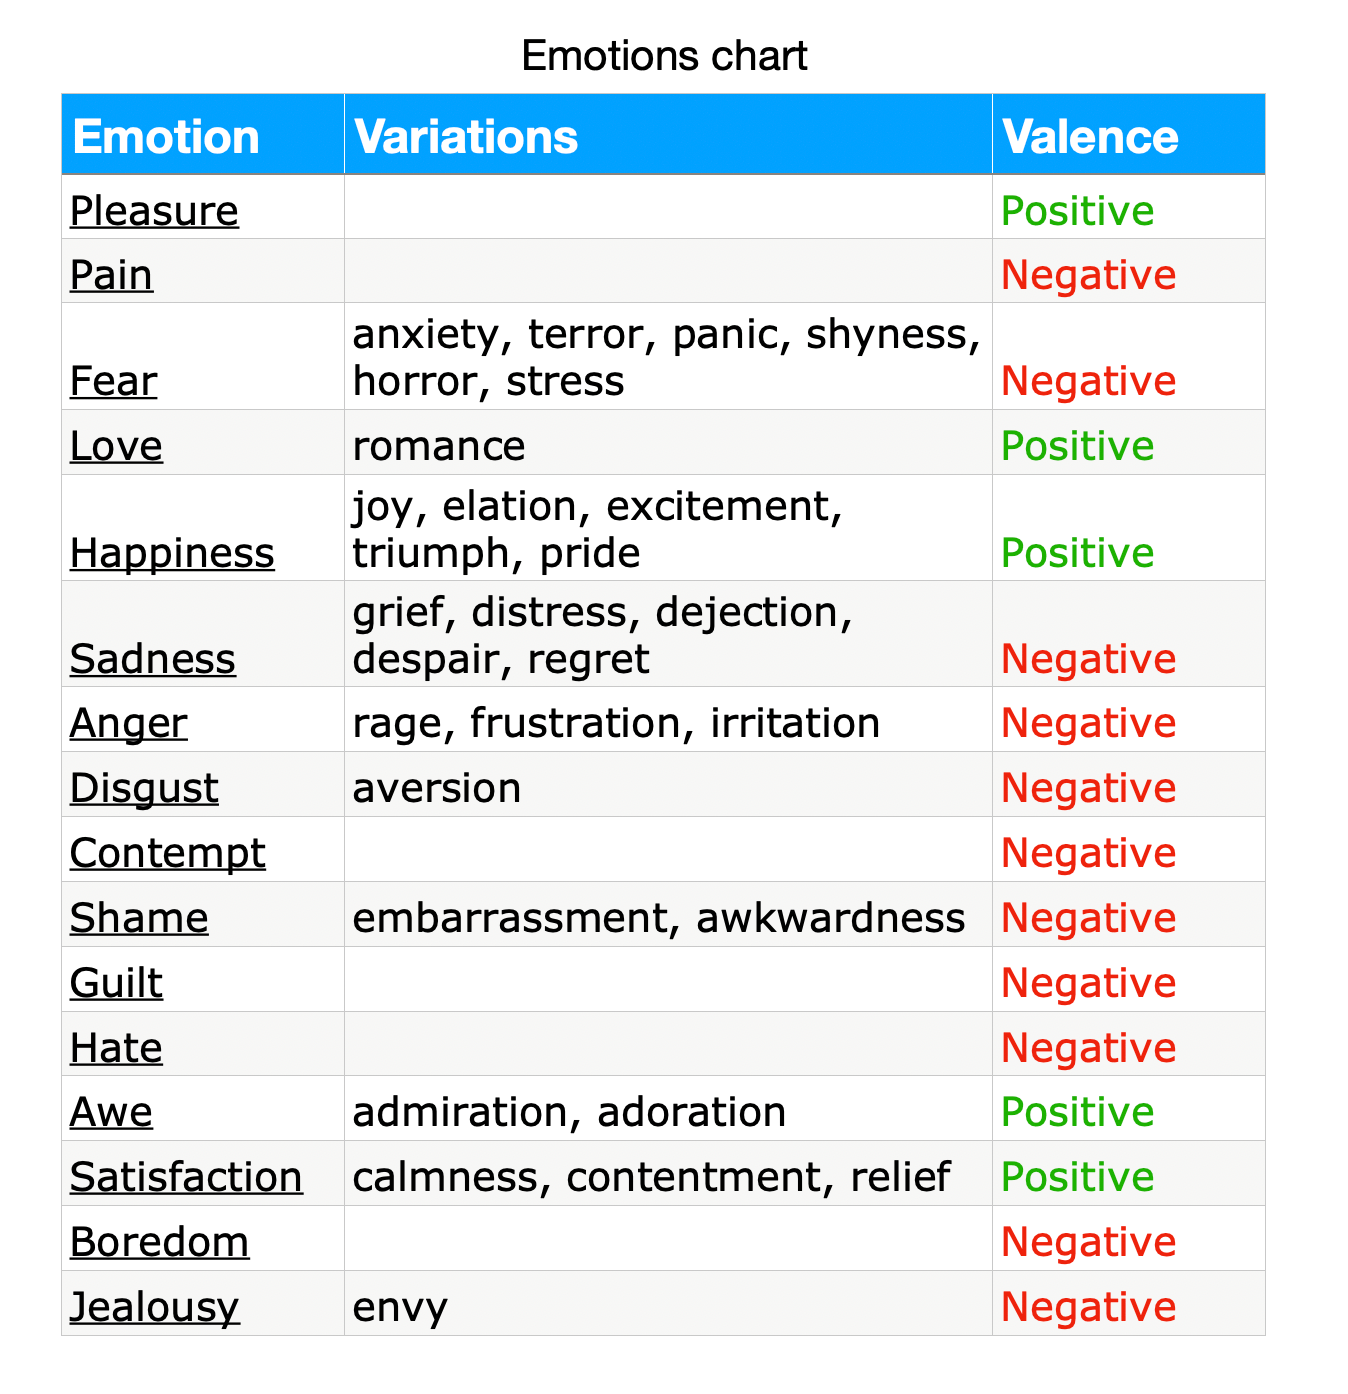 Emotions chart of 16 emotions - PsychMechanics